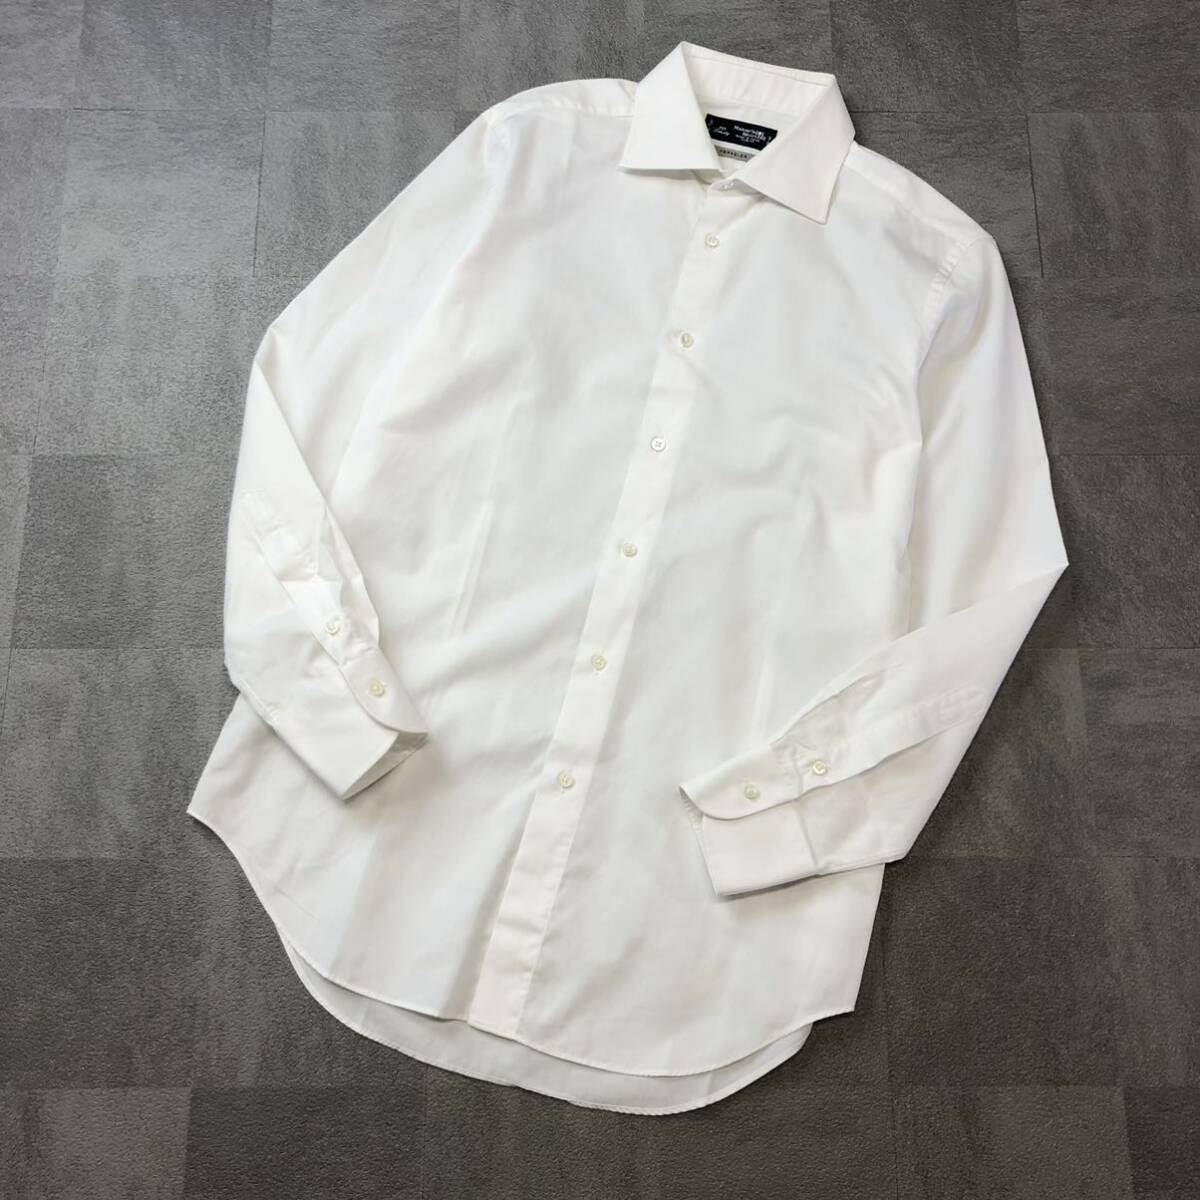 Maker's shirt鎌倉シャツ 長袖シャツ ドレスシャツ SLIM FIT TRAVELER 無地シャツ ホワイト 39-83 15 1/2-32 1/2 古着の画像1